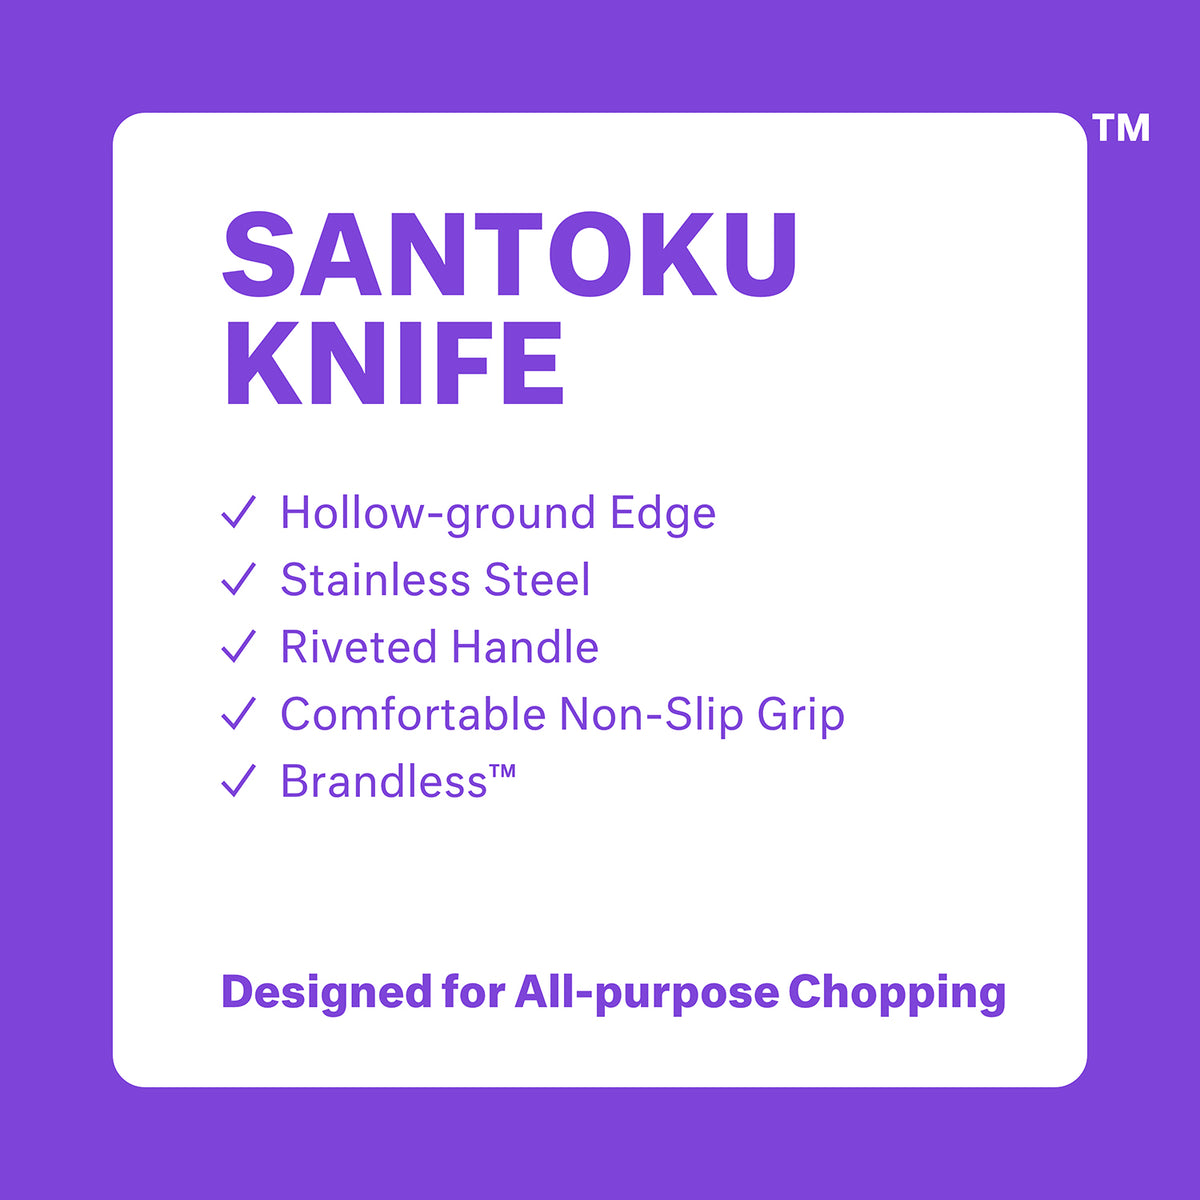 Santoku knife. Hollow ground edge, stainless steel, riveted handle, comfortable non-slip grip, brandless.